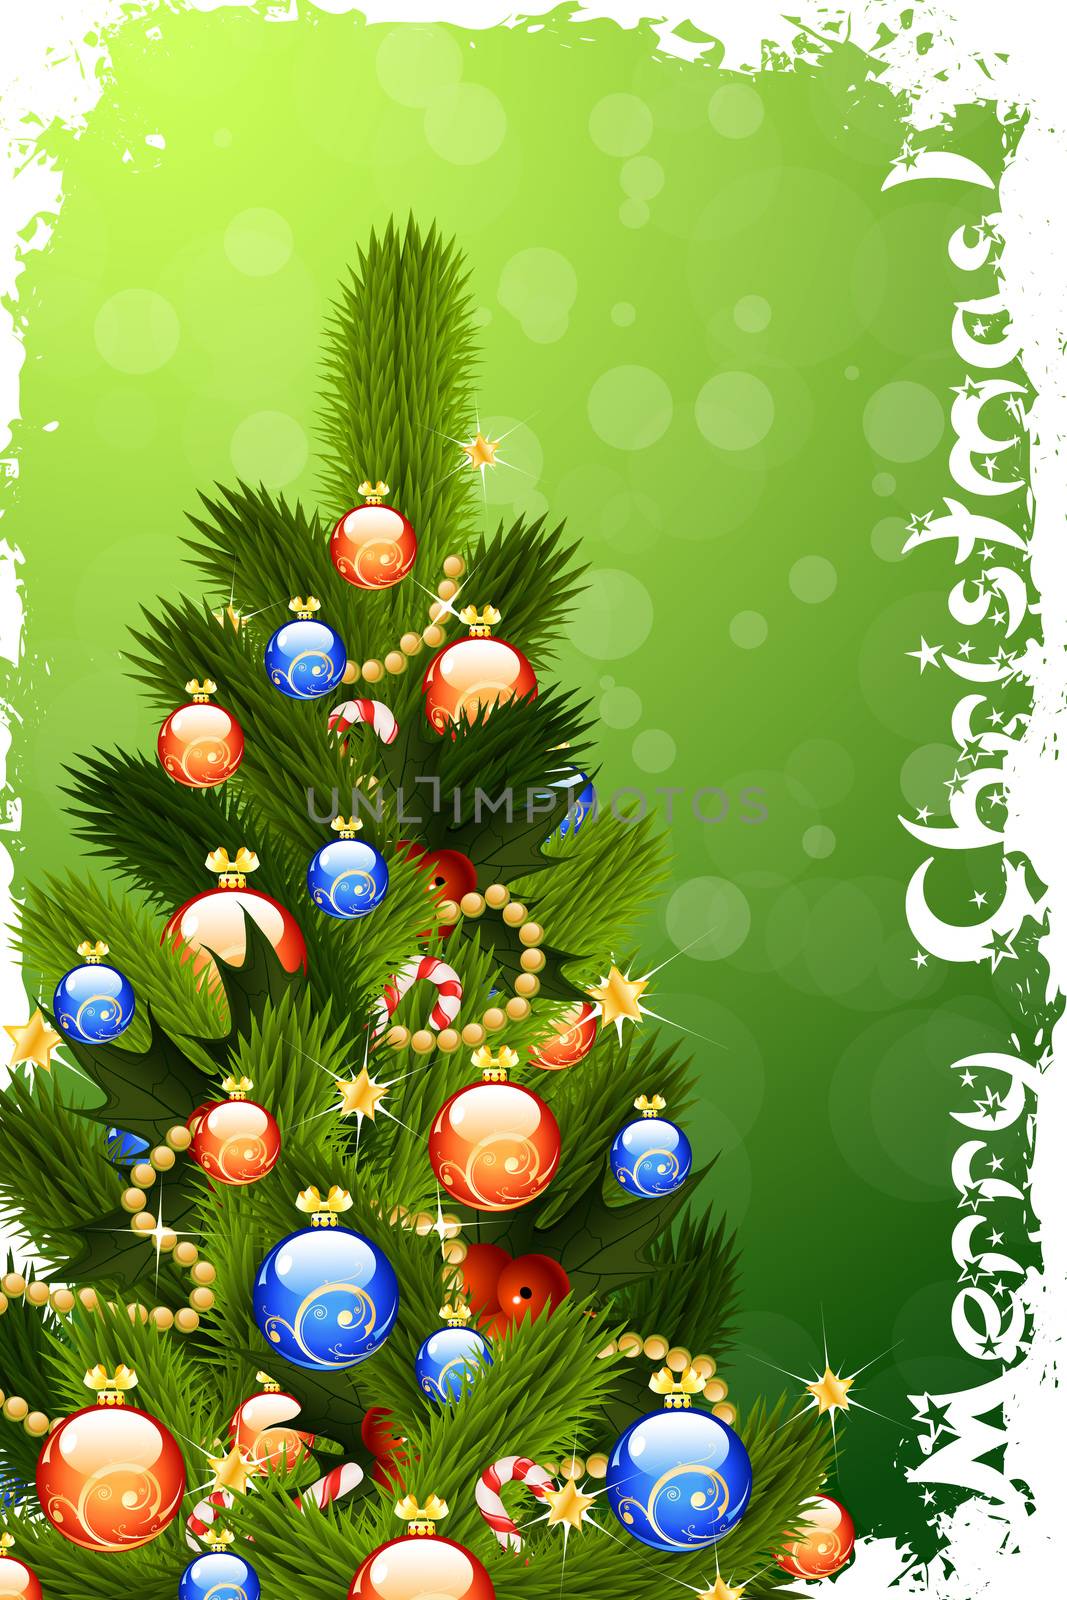 Merry Christmas Greeting Card with Christmas Tree